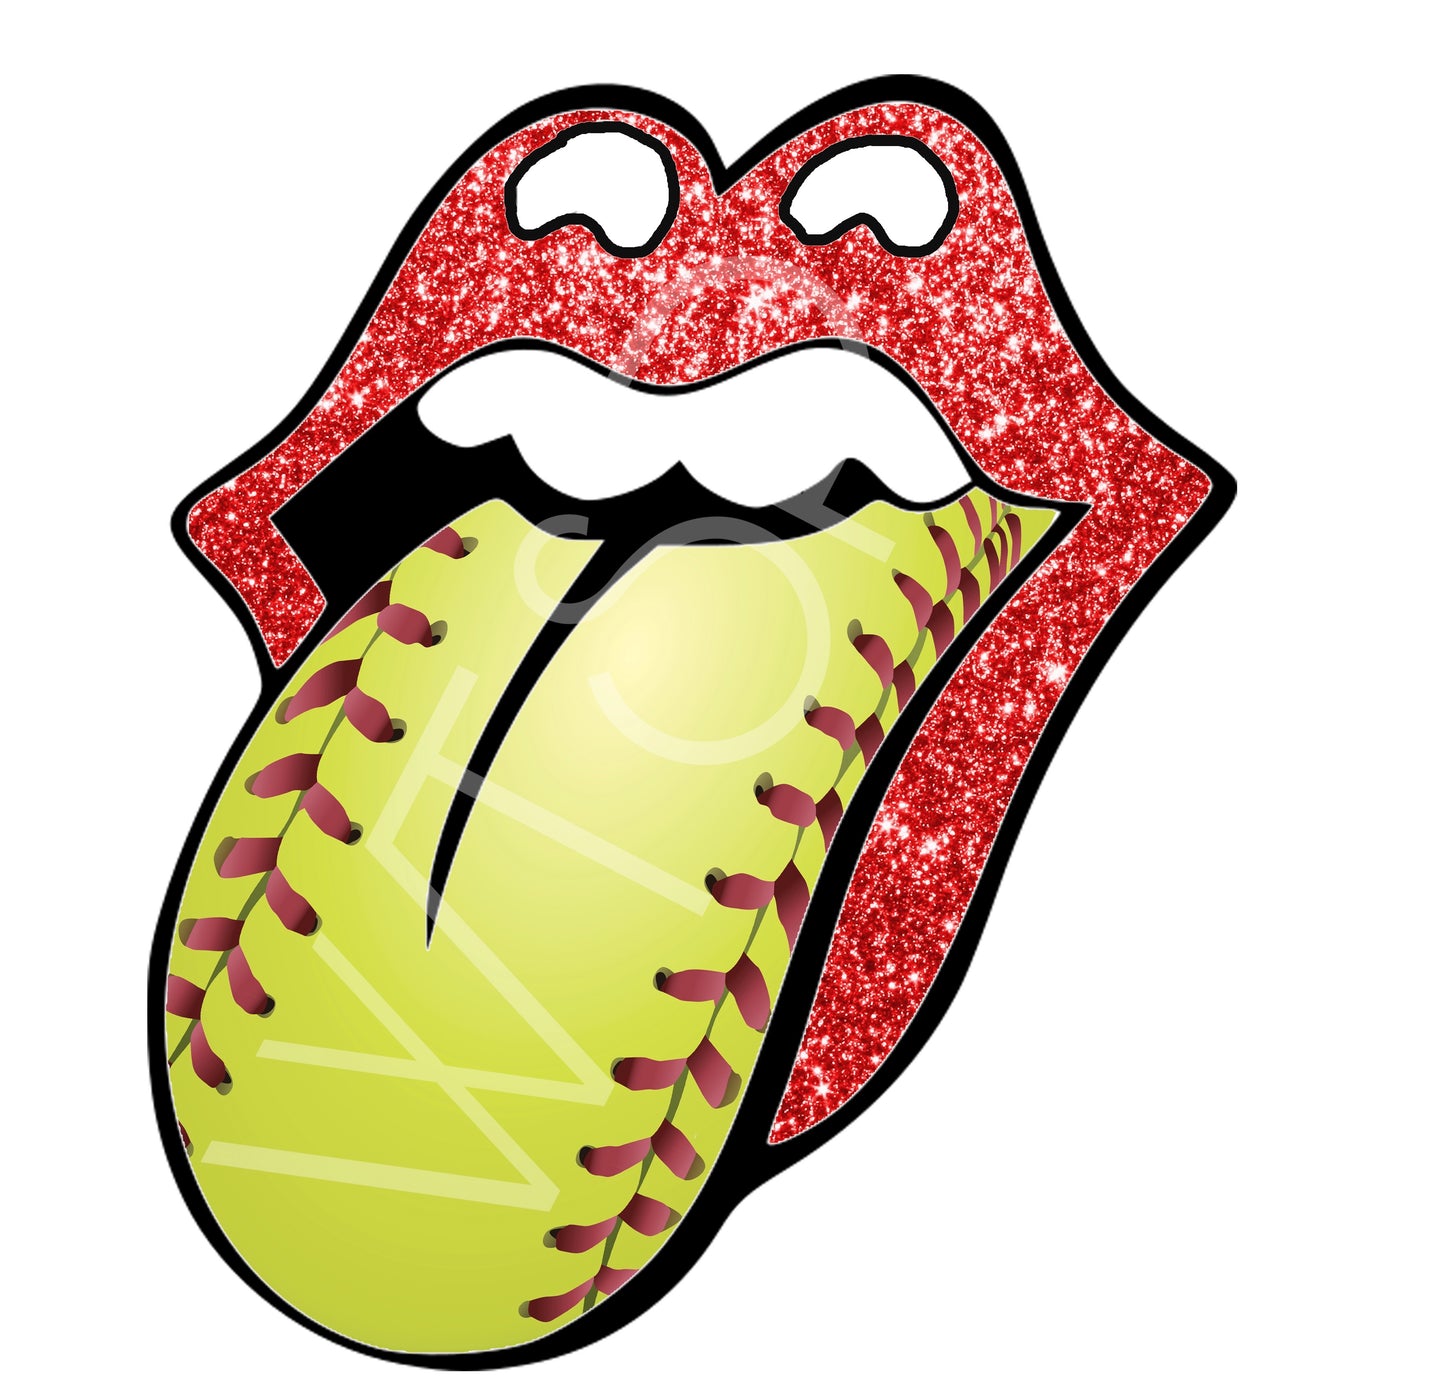 Softball lips